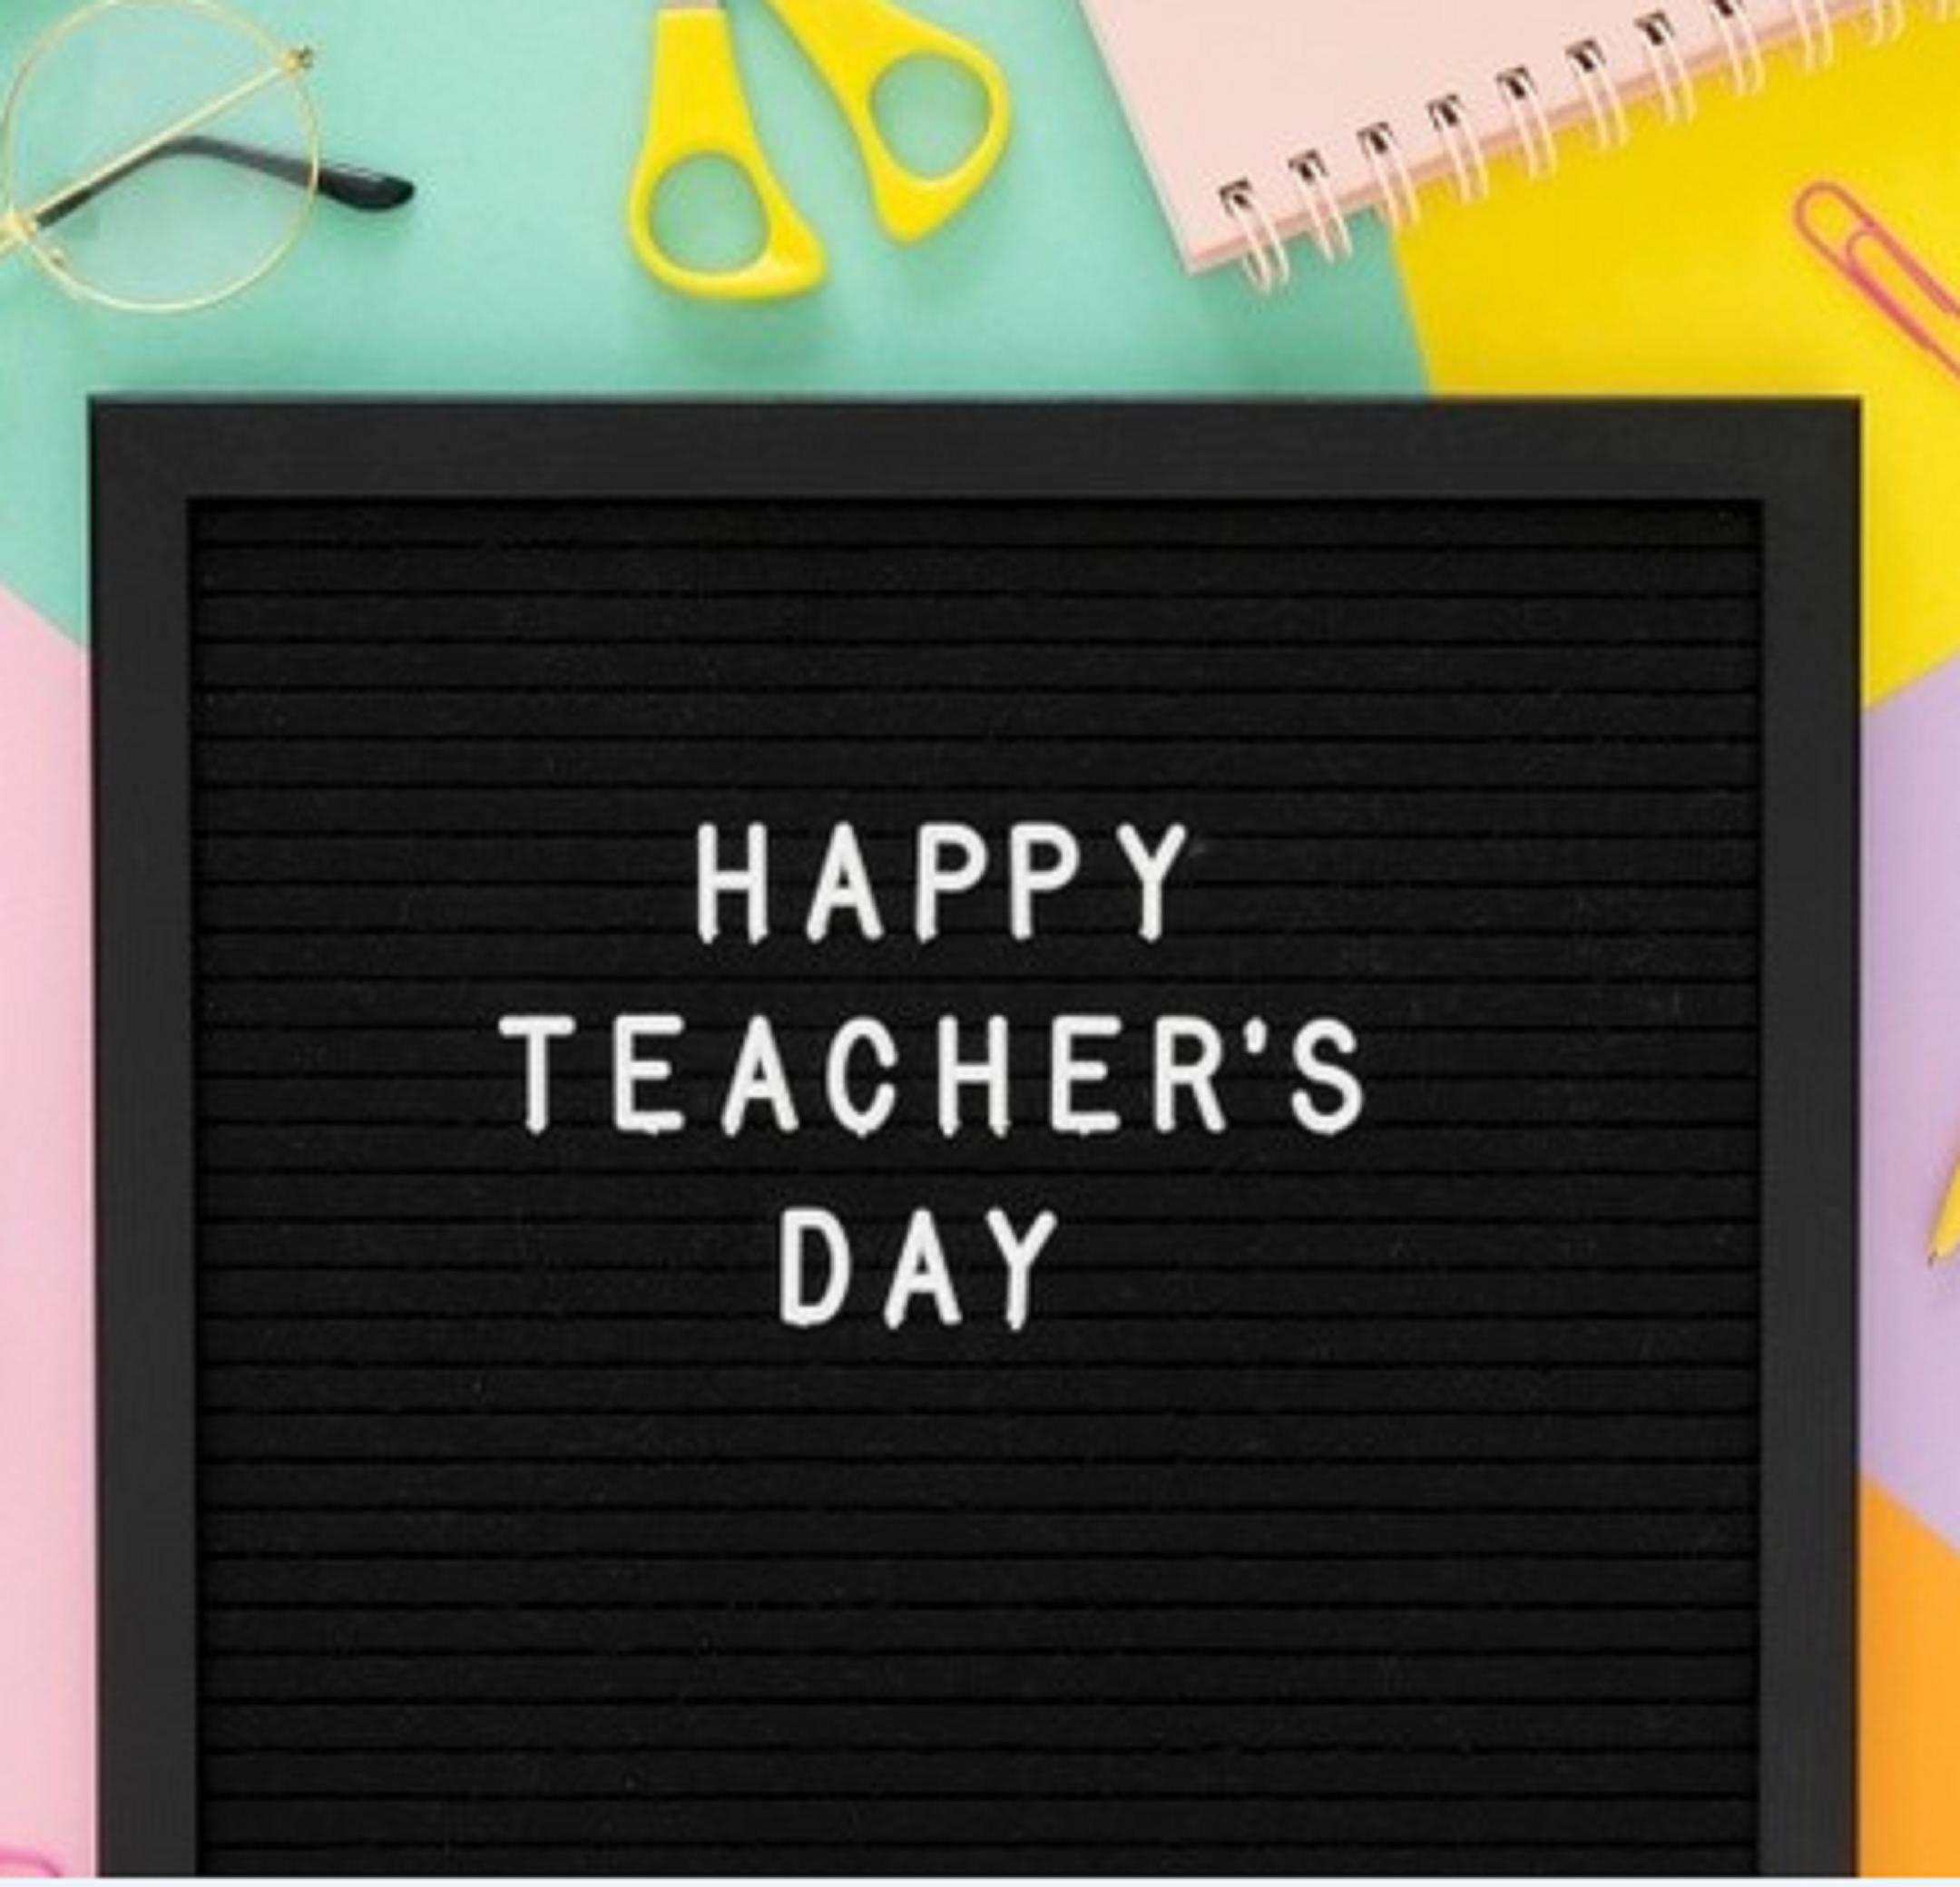 Happy World Teacher's Day!